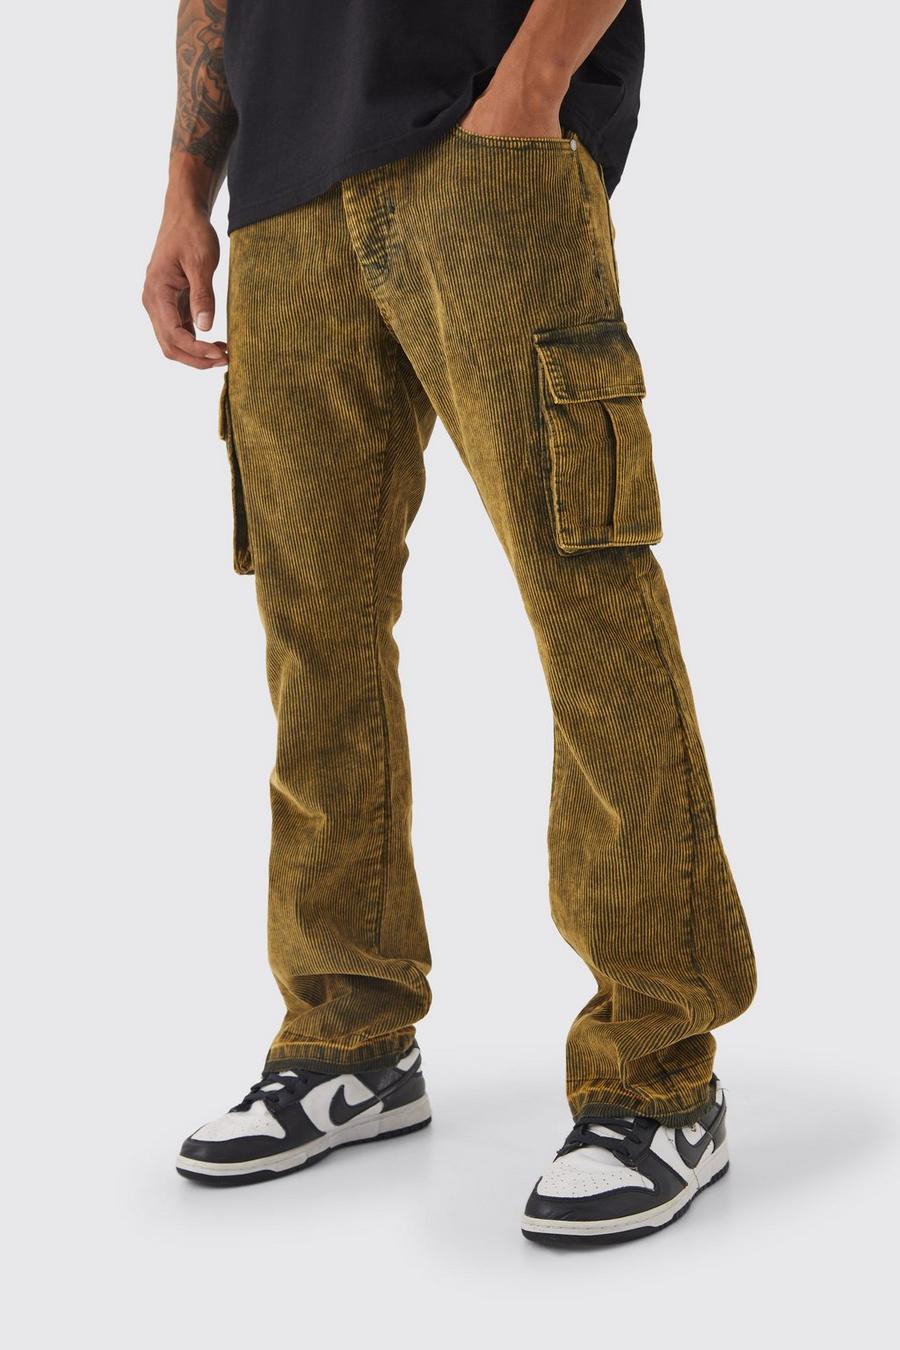 Urban Edge Brown Cargo Pants